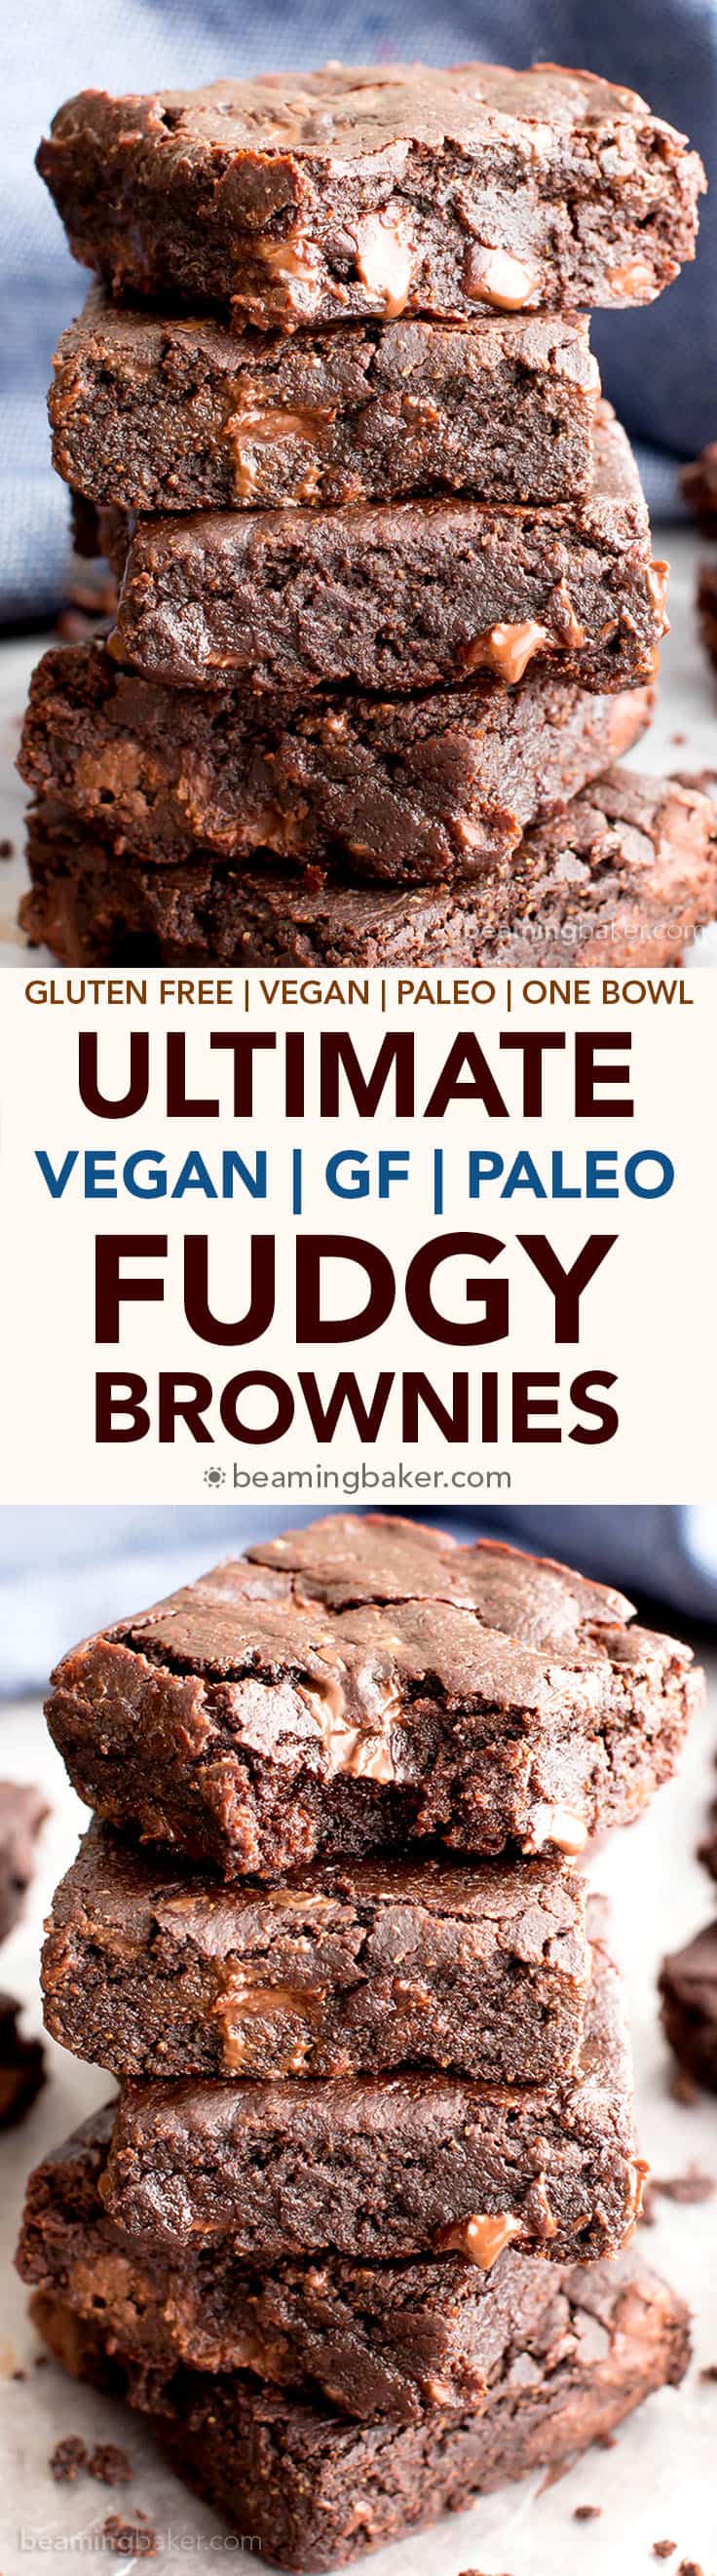 Ultimate Fudgy Paleo Vegan Brownies Recipe (GF): ultra-moist, deep chocolate flavor, fudgy, gooey YUM—the BEST paleo brownies recipe! Made with almond flour, Gluten Free, Vegan, Grain-Free. #Paleo #Brownies #Vegan #Fudgy | Recipe at BeamingBaker.com